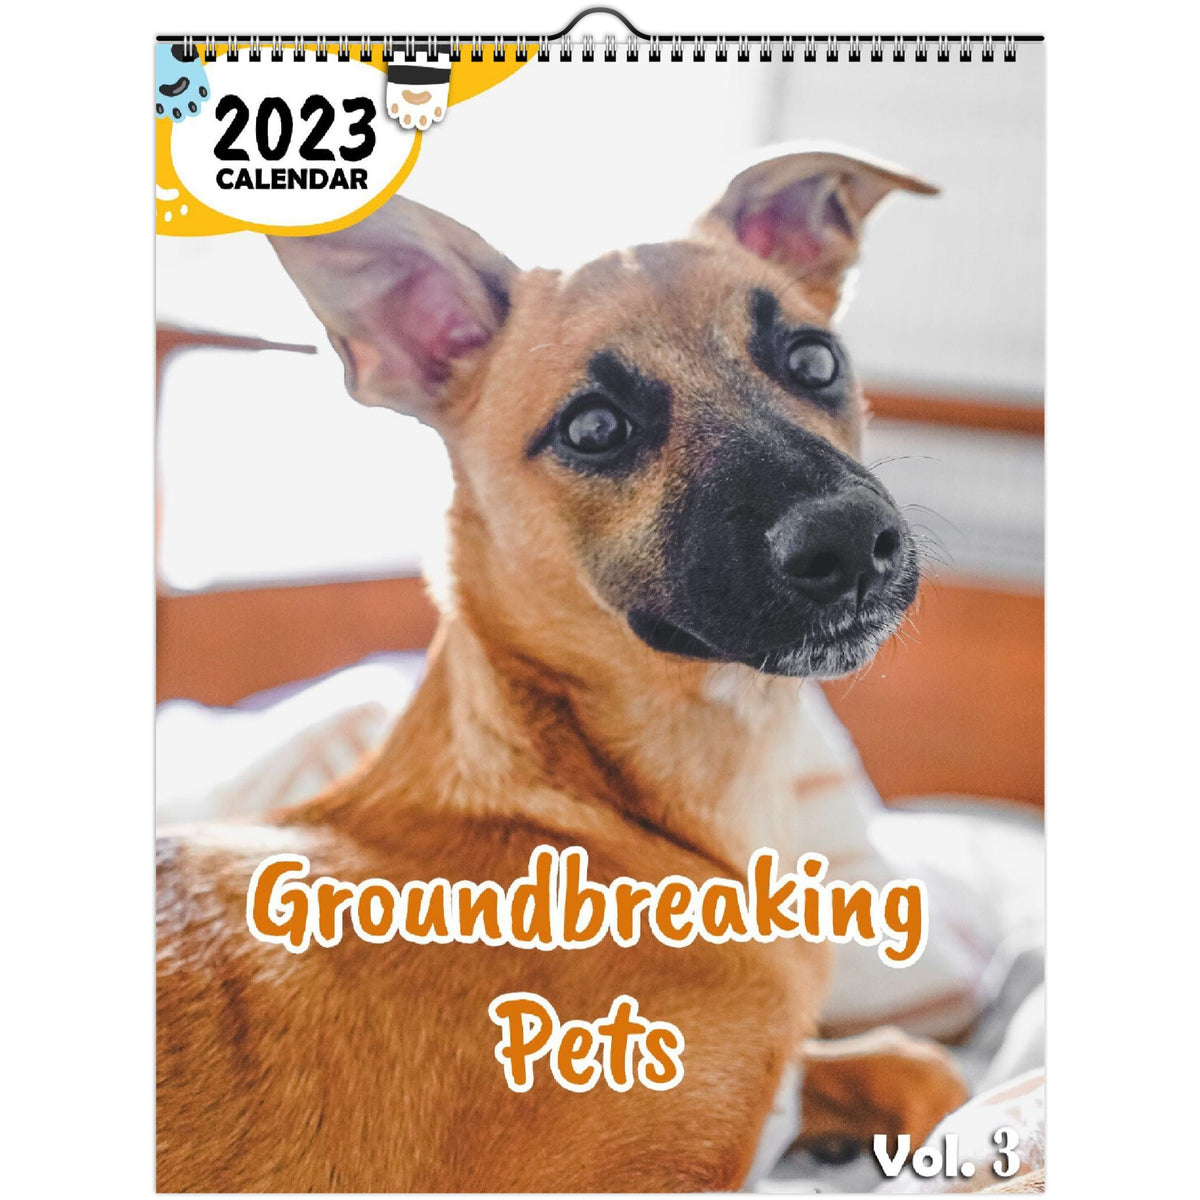 Groundbreaking Pets Volume Three 2023 Wall Calendar The Blissful Birder